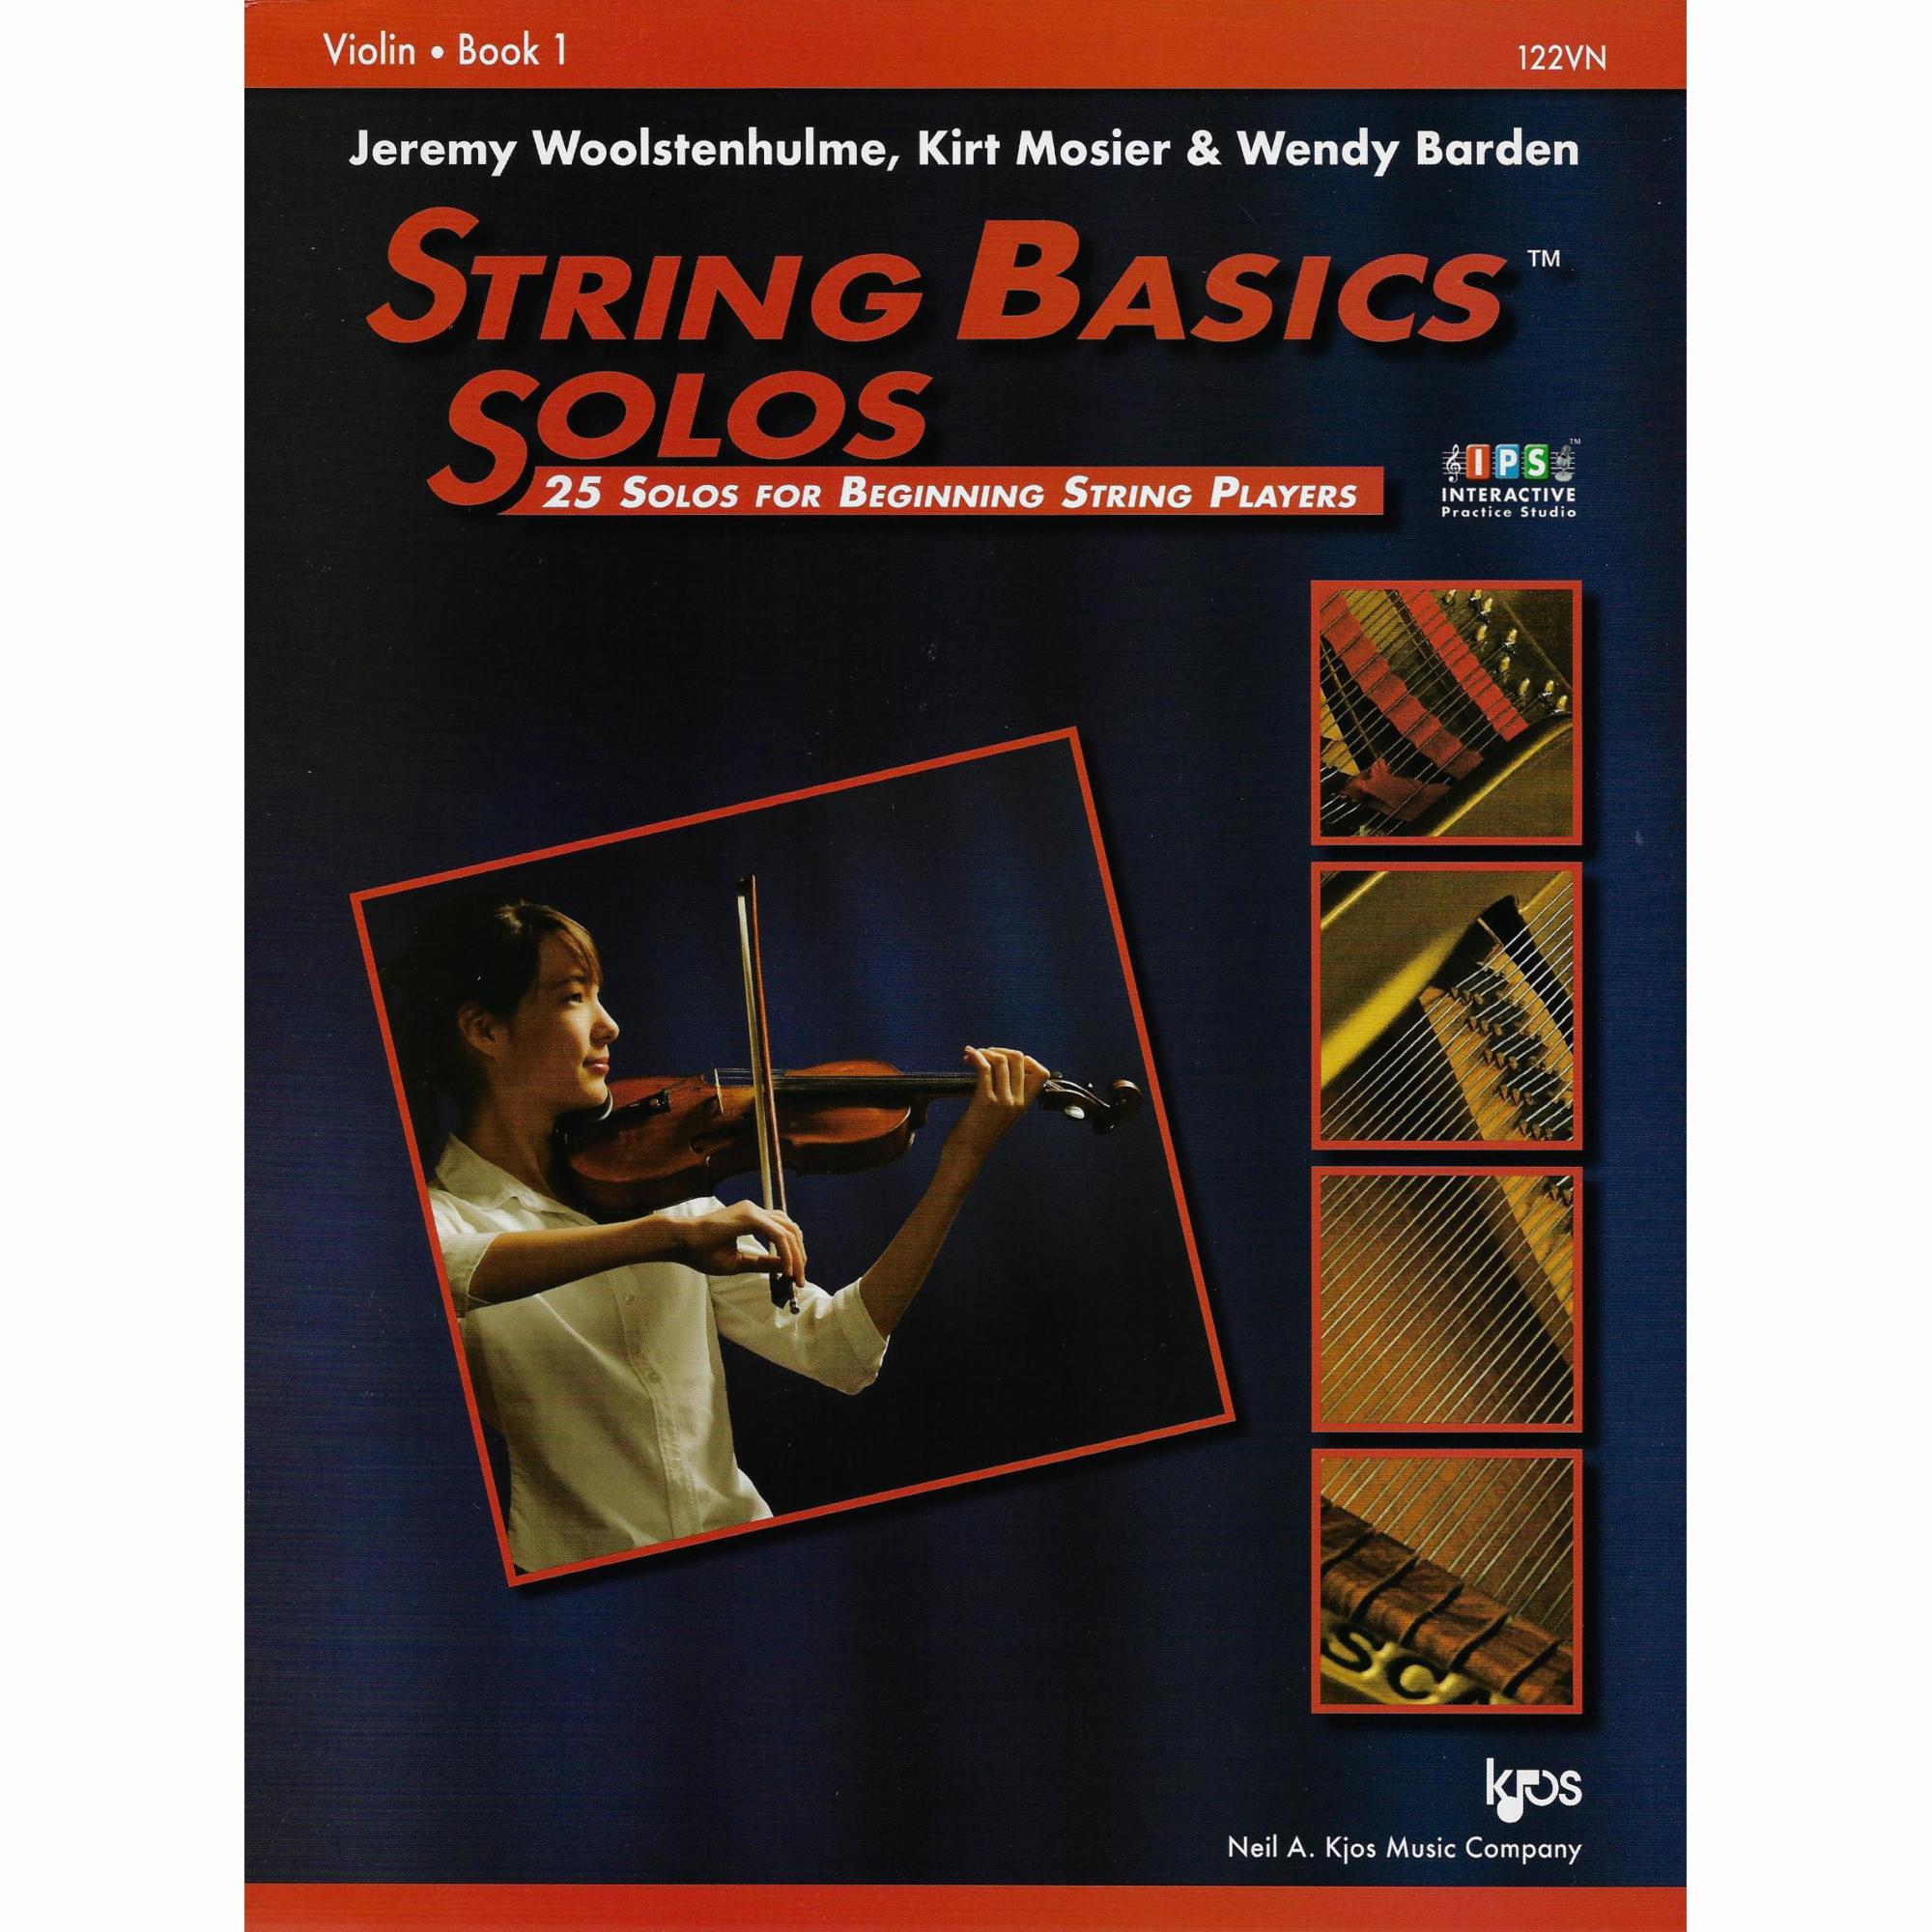 String Basics Solos